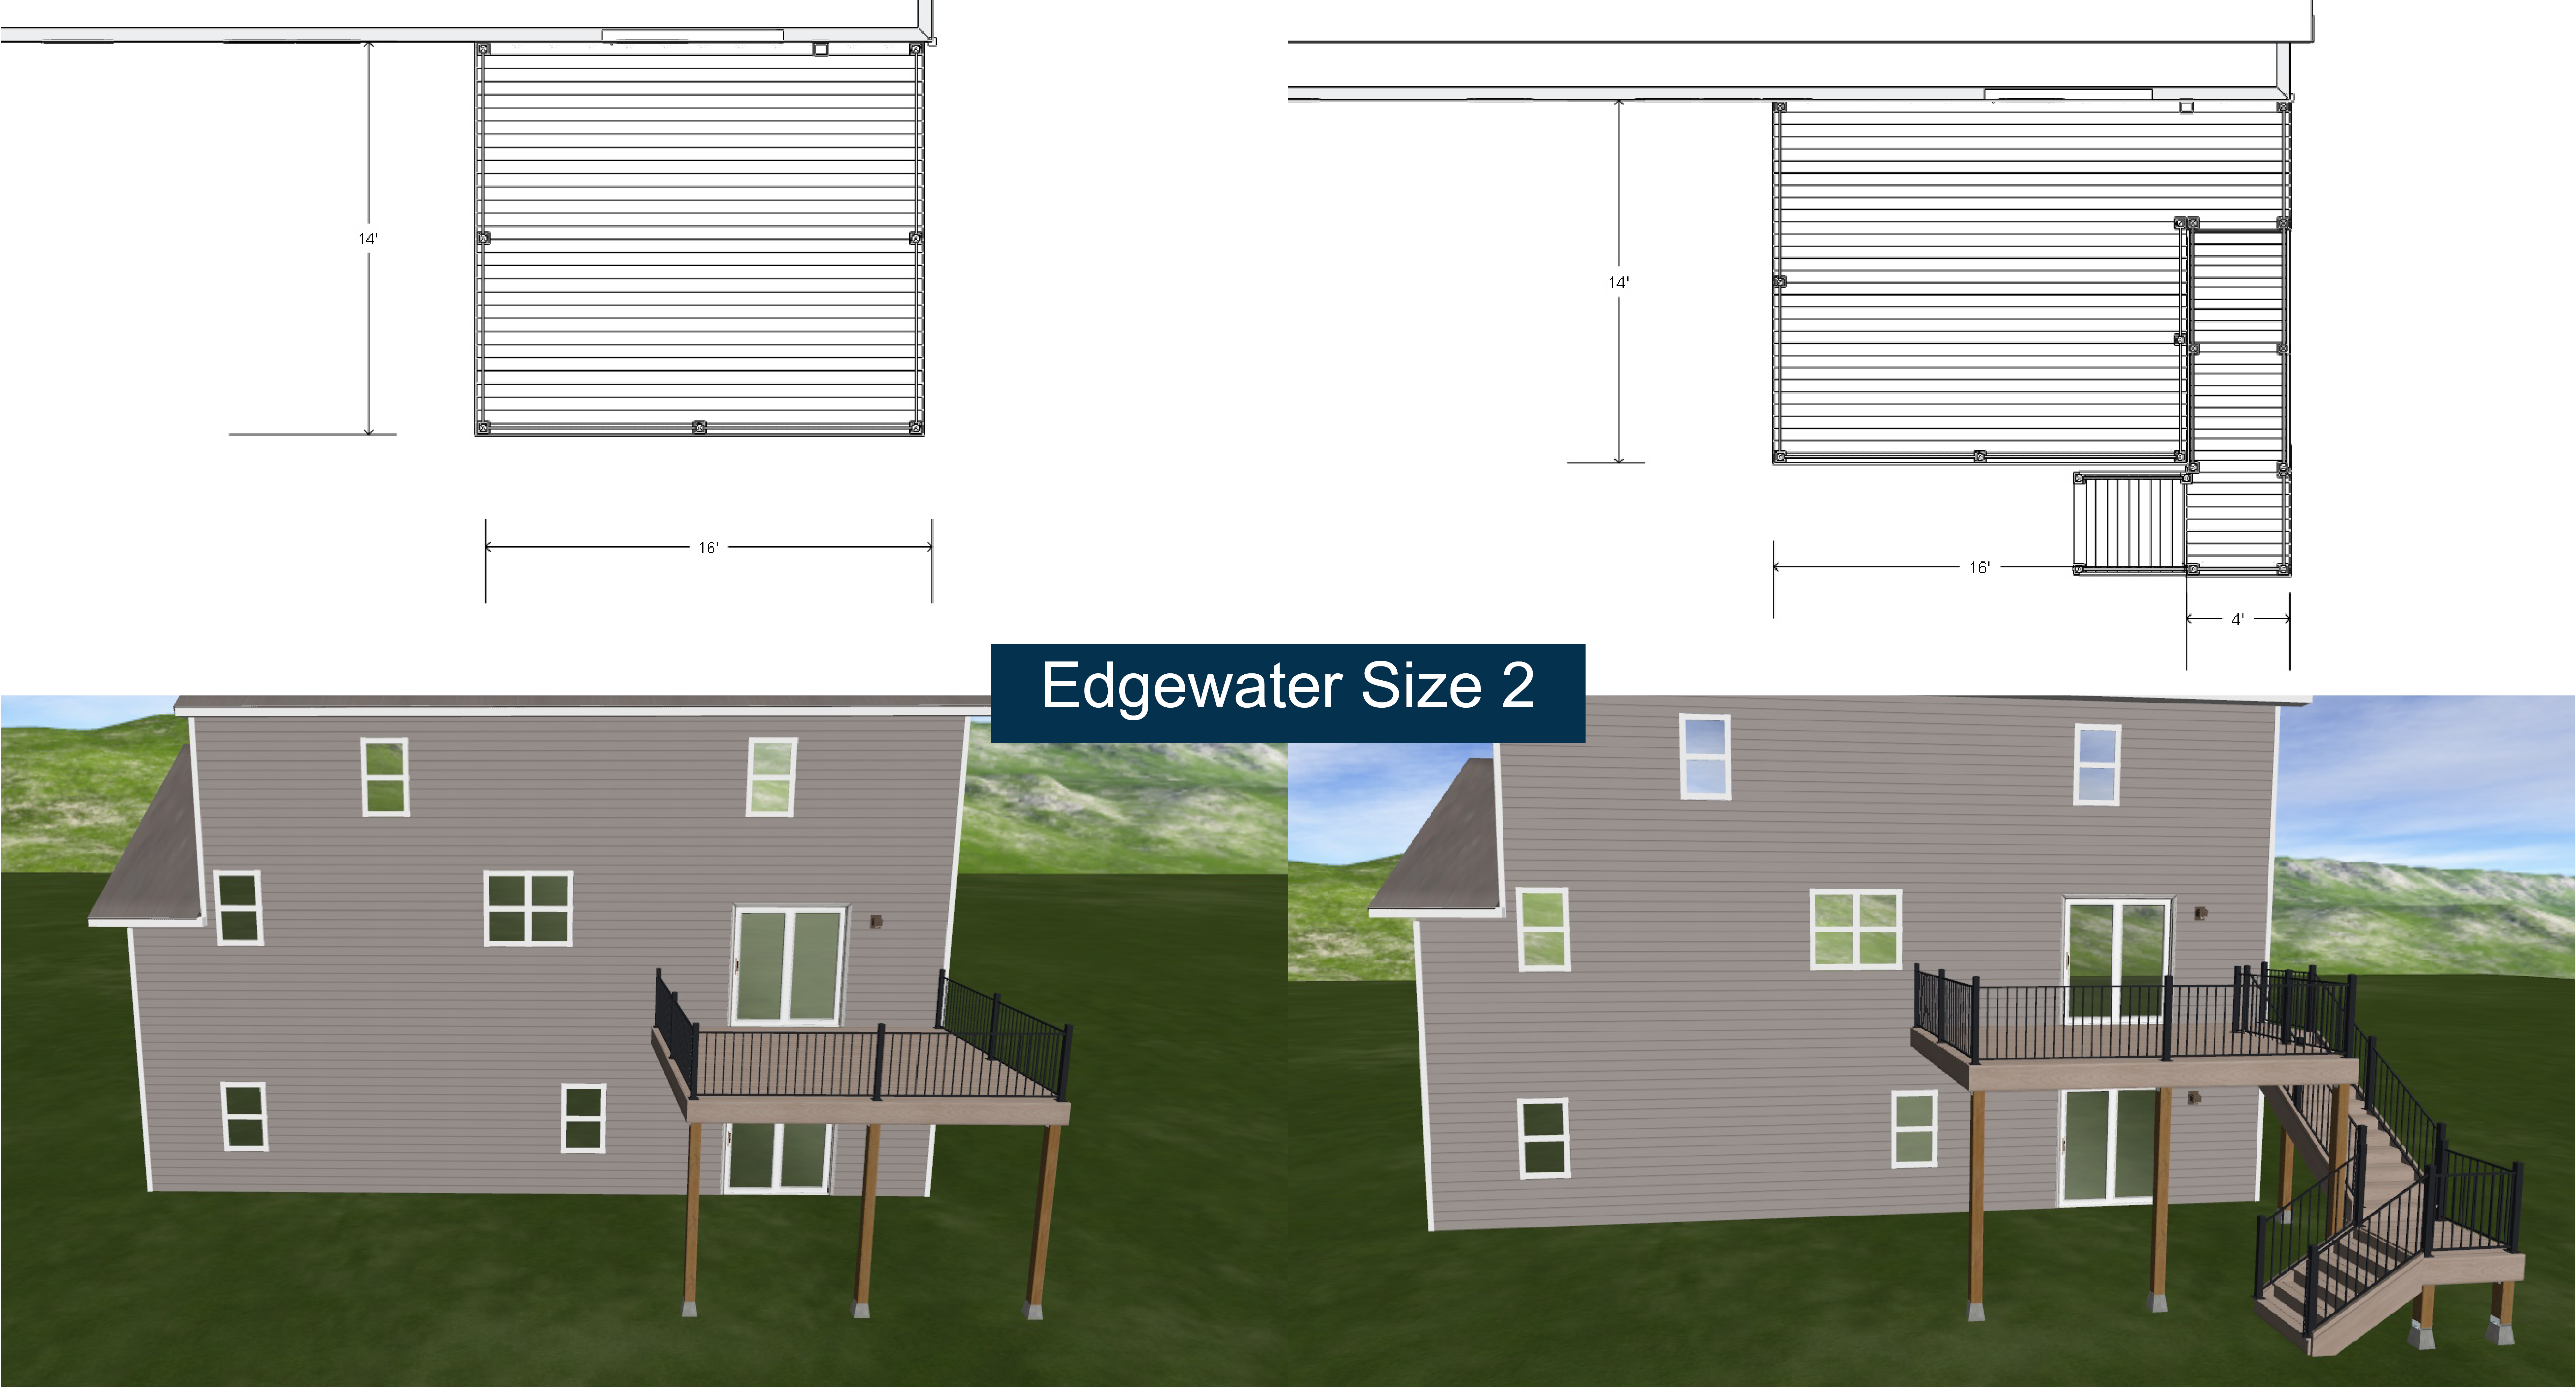 CWeb Edgewater Size 2